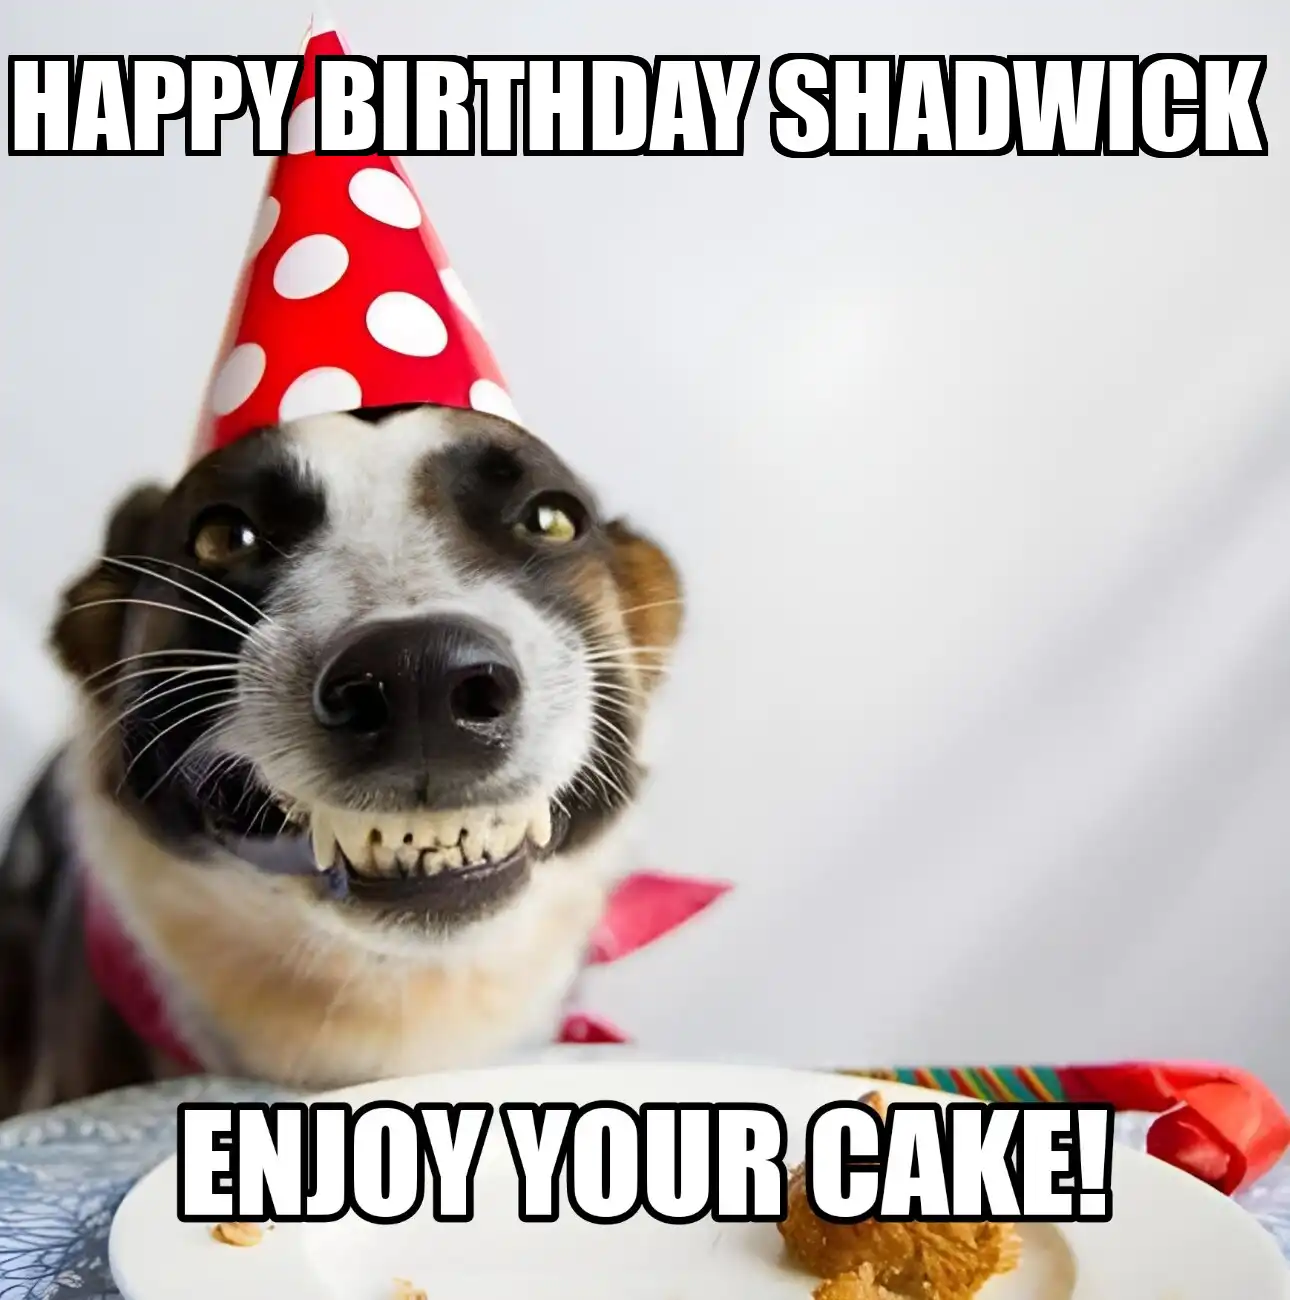 Happy Birthday Shadwick Enjoy Your Cake Dog Meme